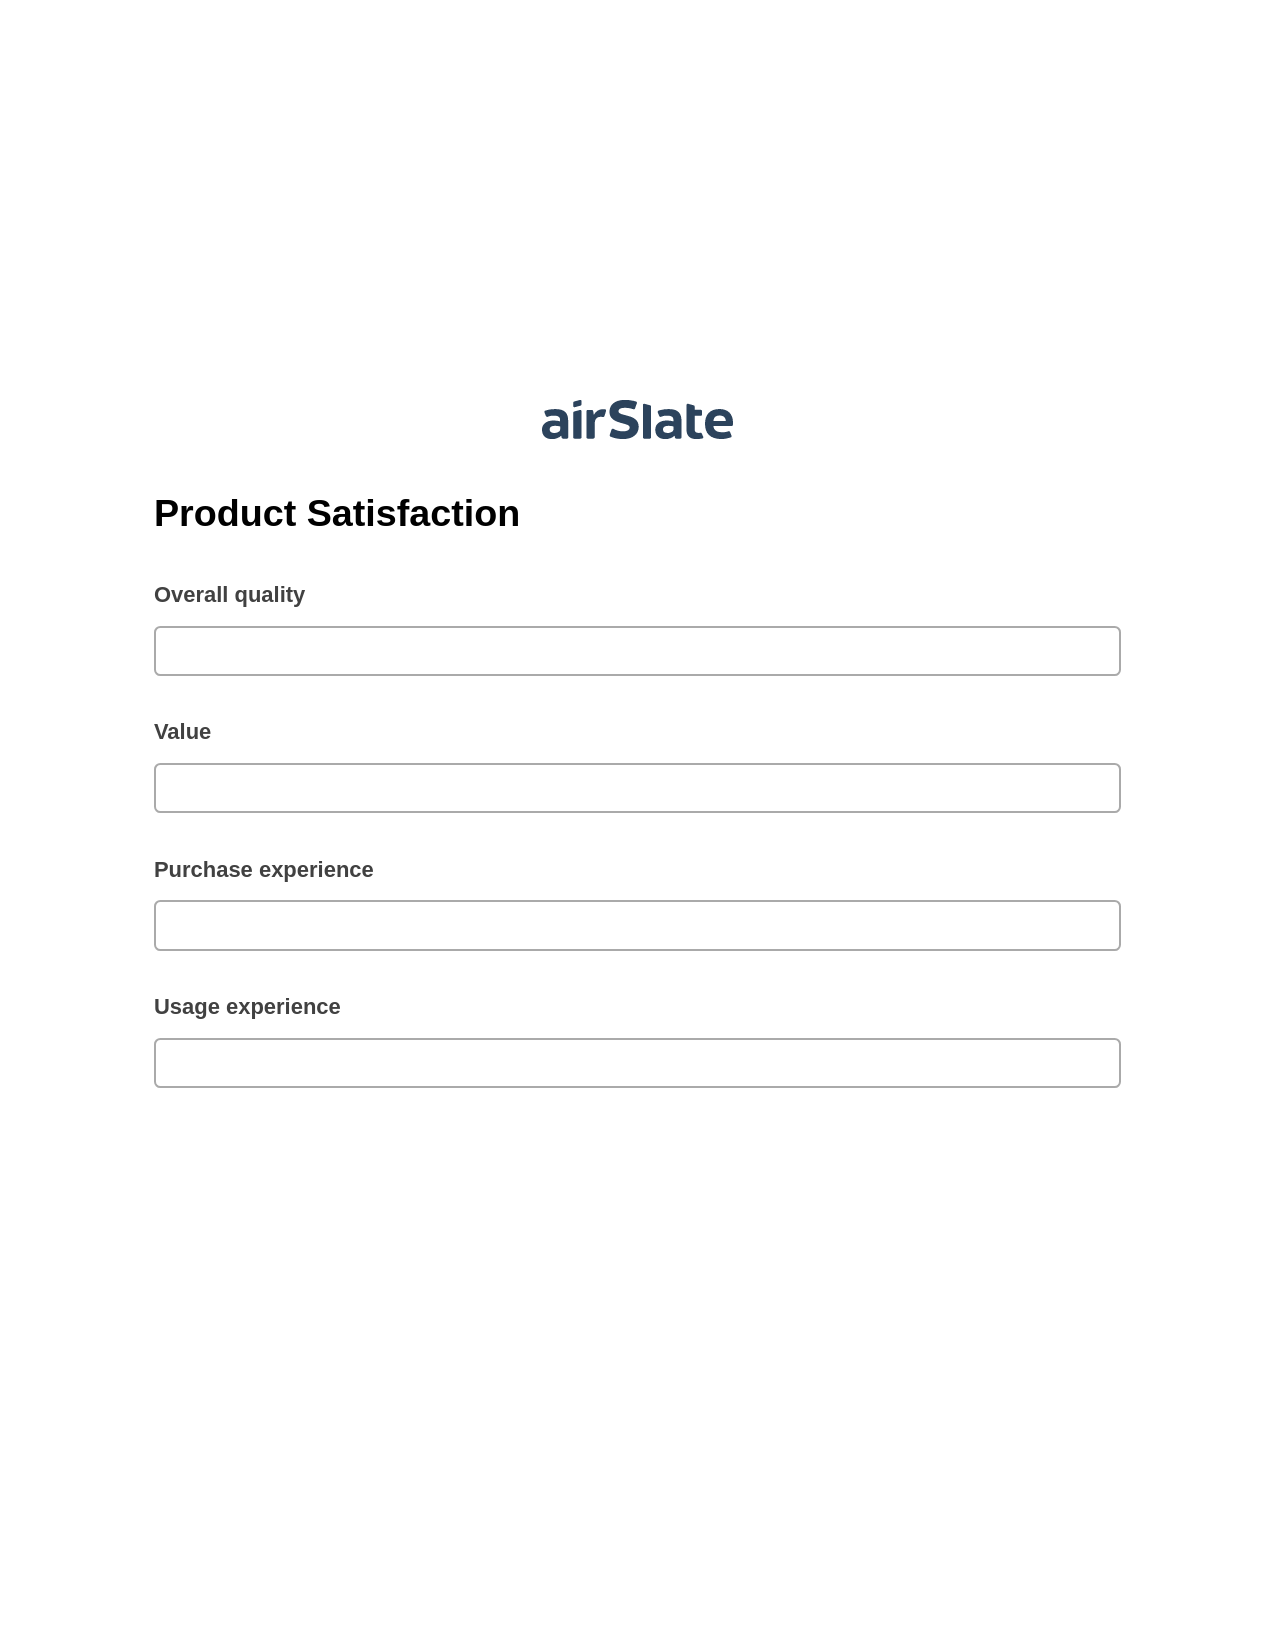 Multirole Product Satisfaction Pre-fill Slate from MS Dynamics 365 Records Bot, Webhook Bot, Slack Notification Postfinish Bot